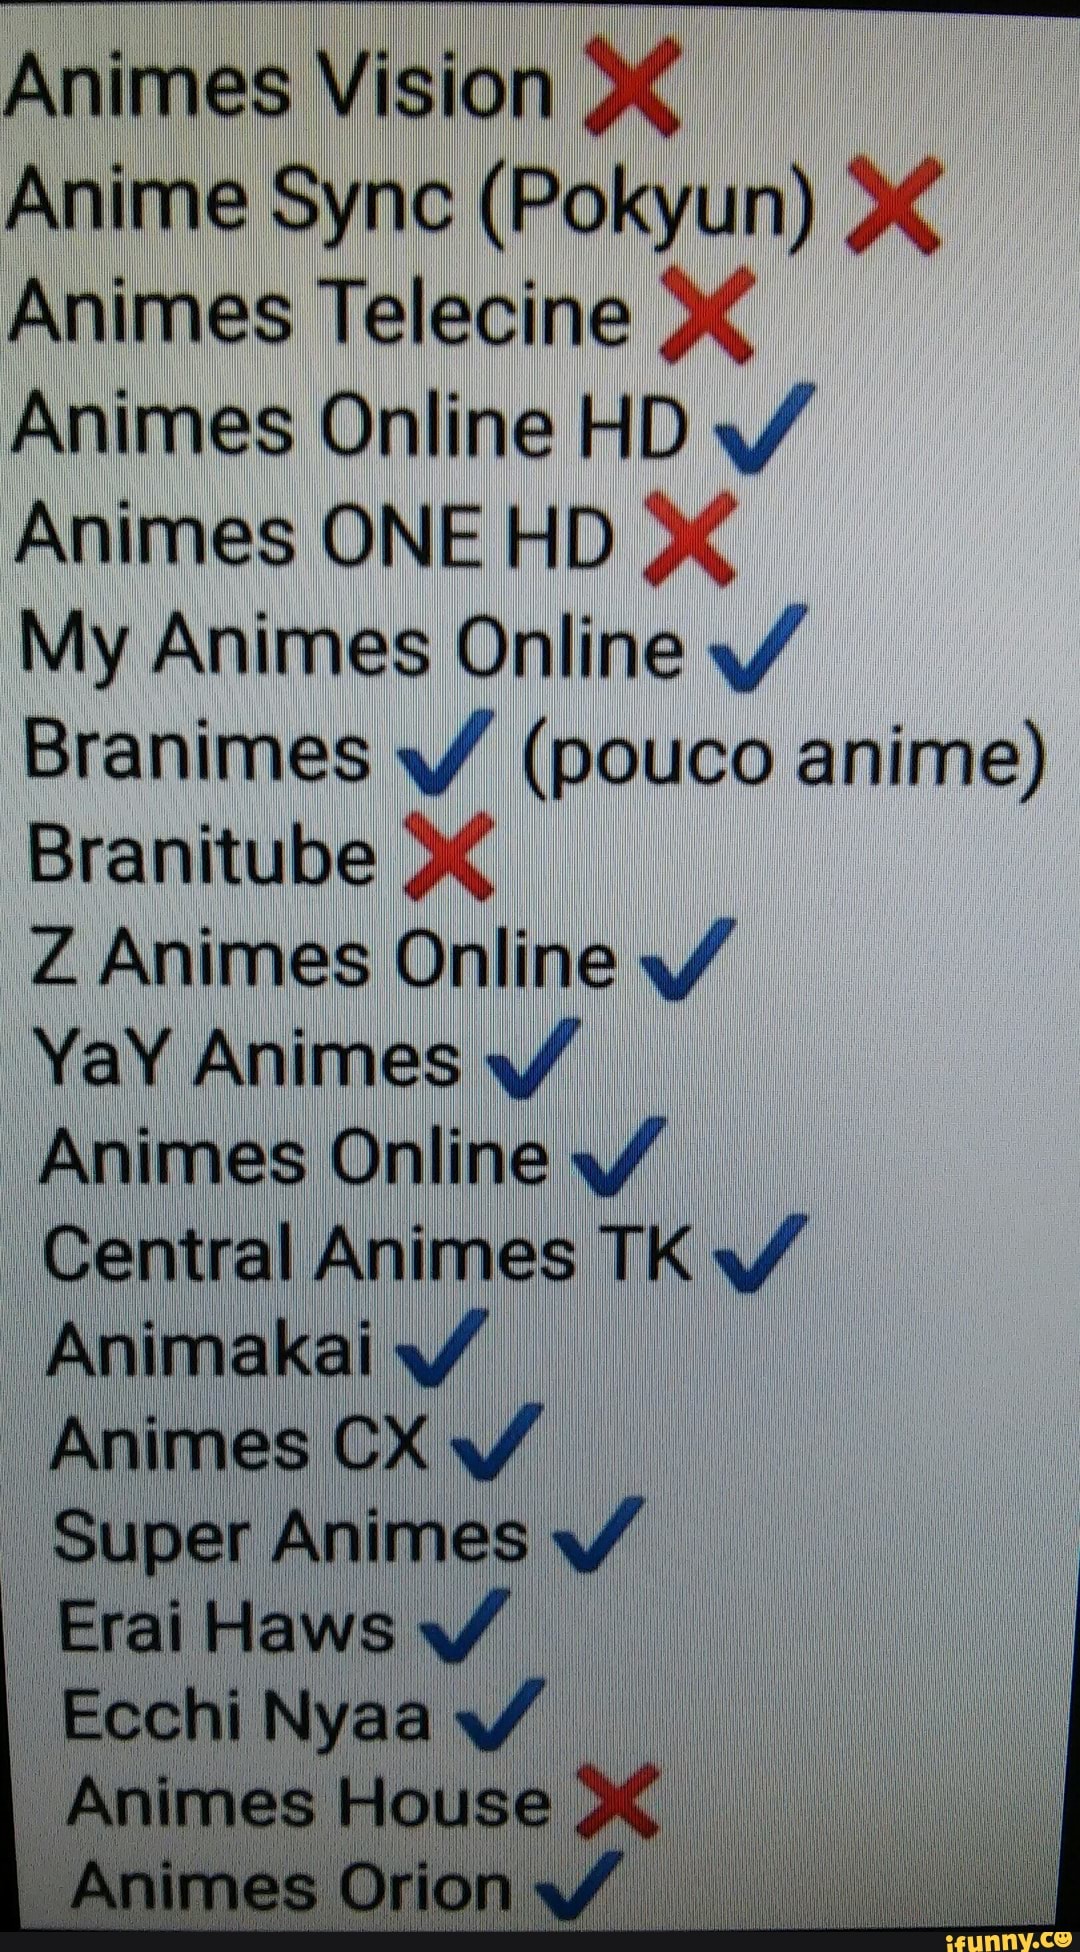 Ani imes Vi n pe o Anime Sync (Pokyun) XX Animes Telecine >¢ Animes Online  HD